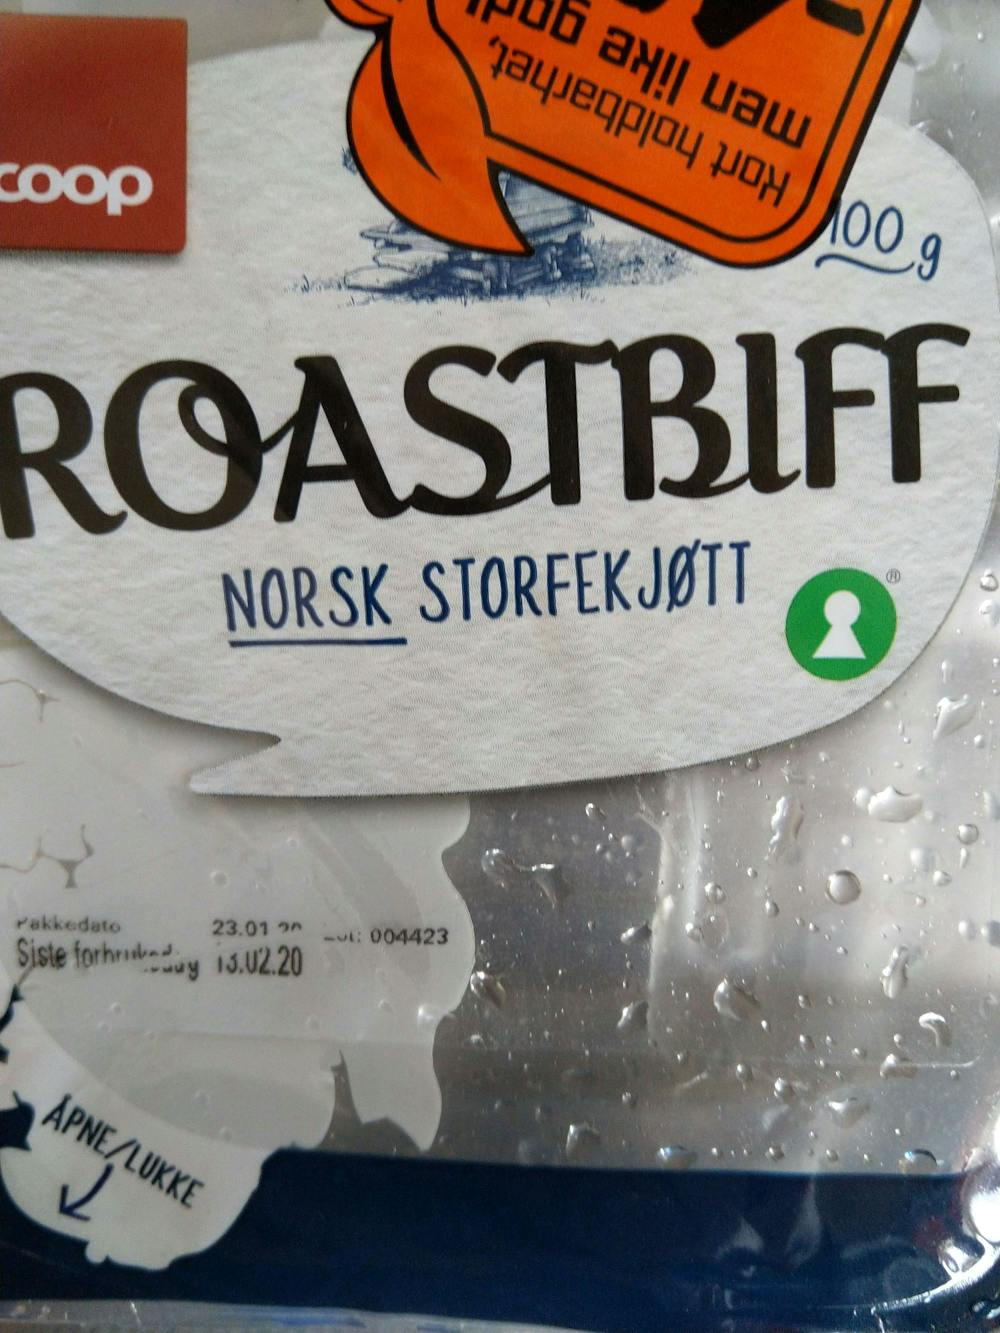 Roastbiff, Coop